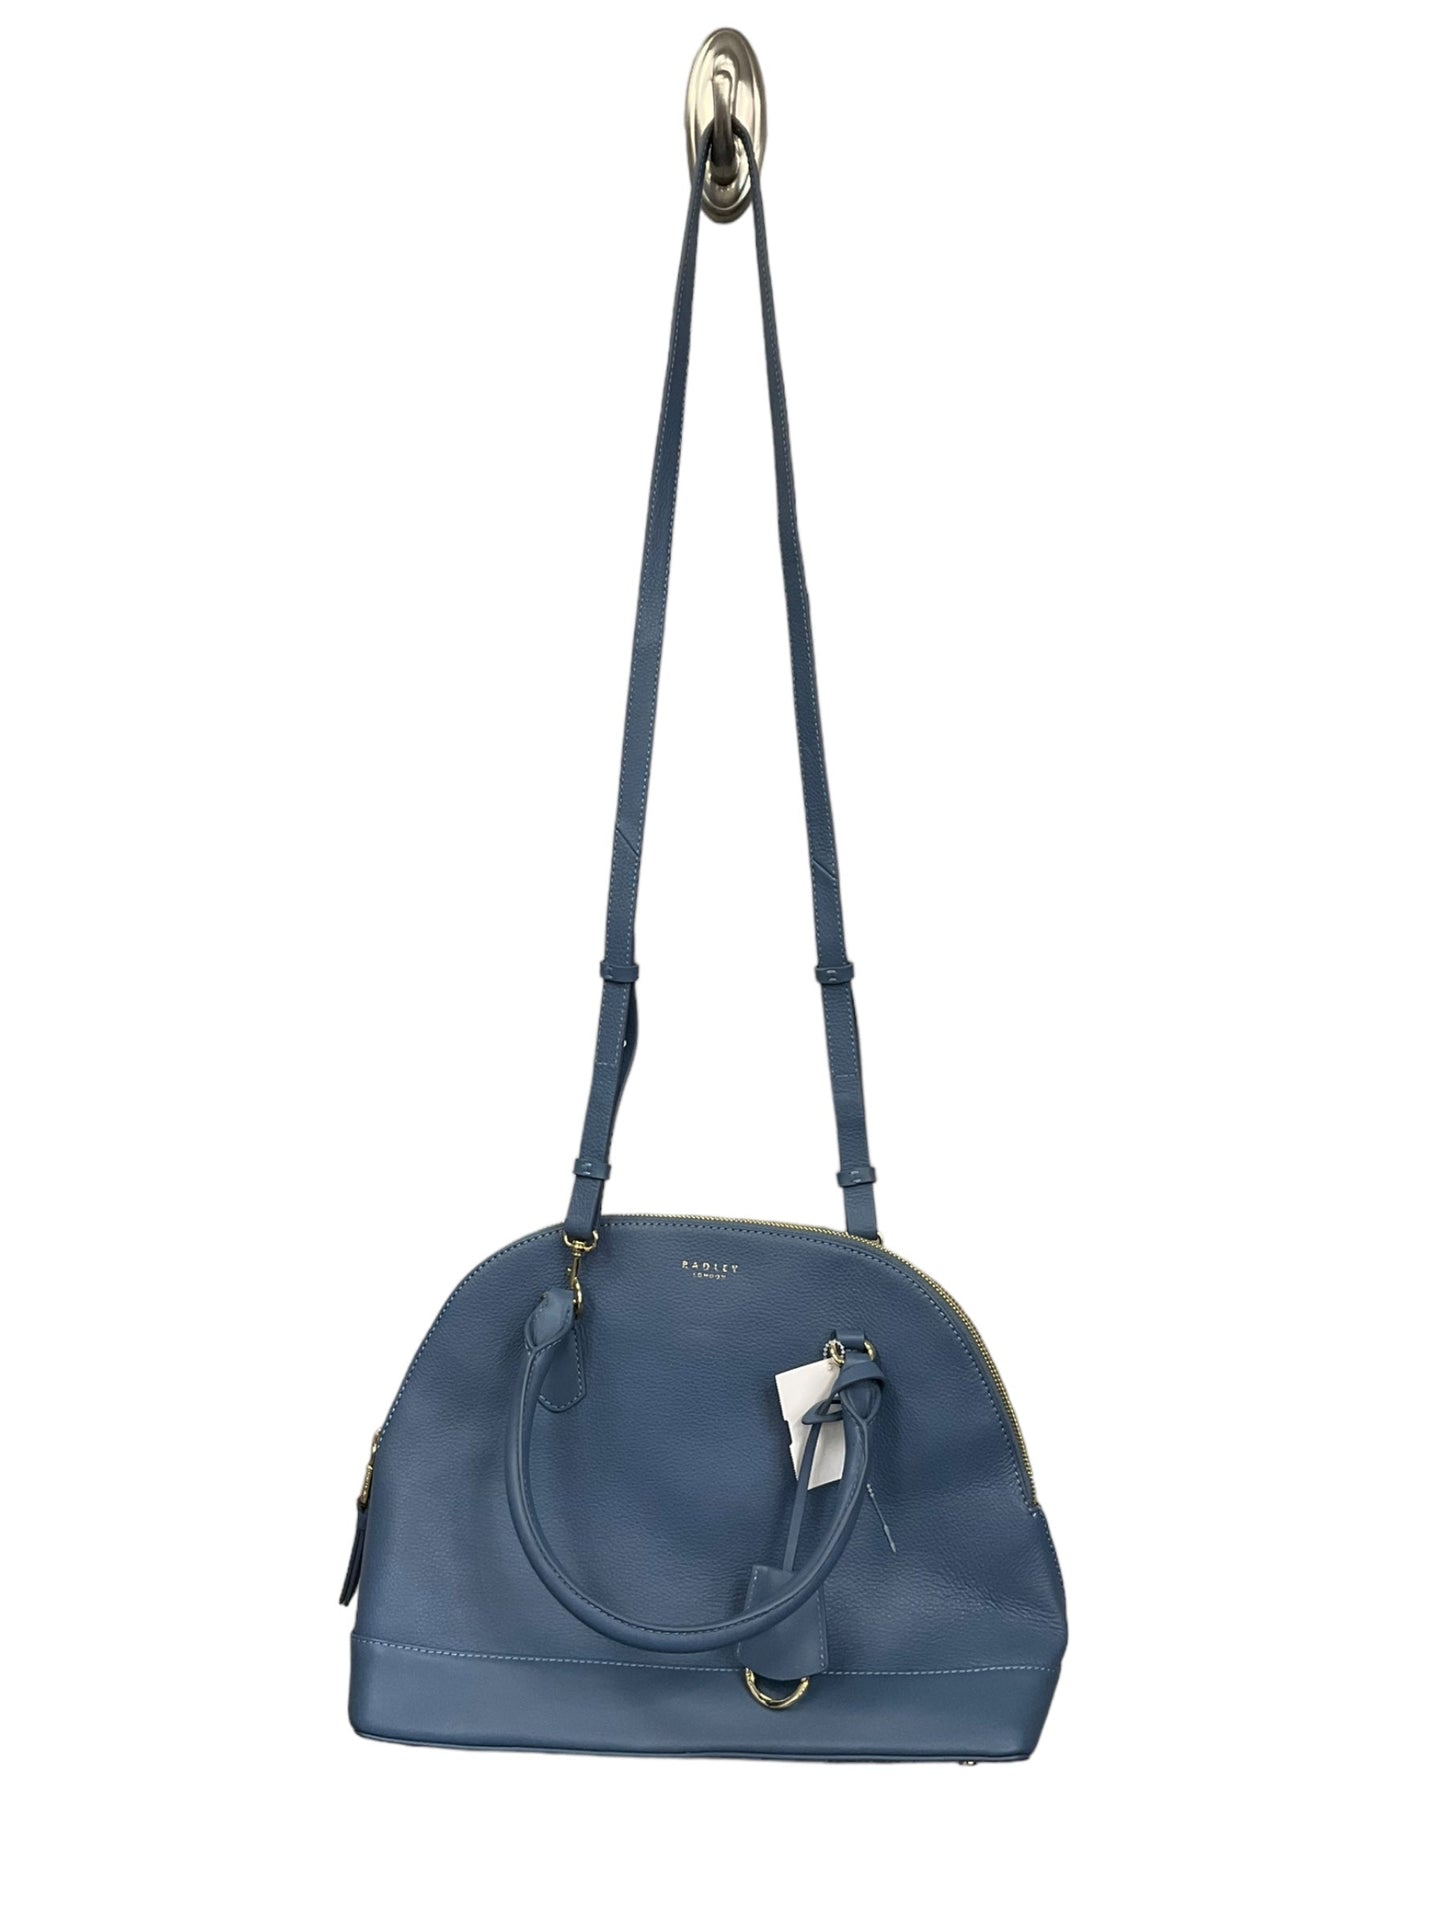 Handbag By Radley London  Size: Large